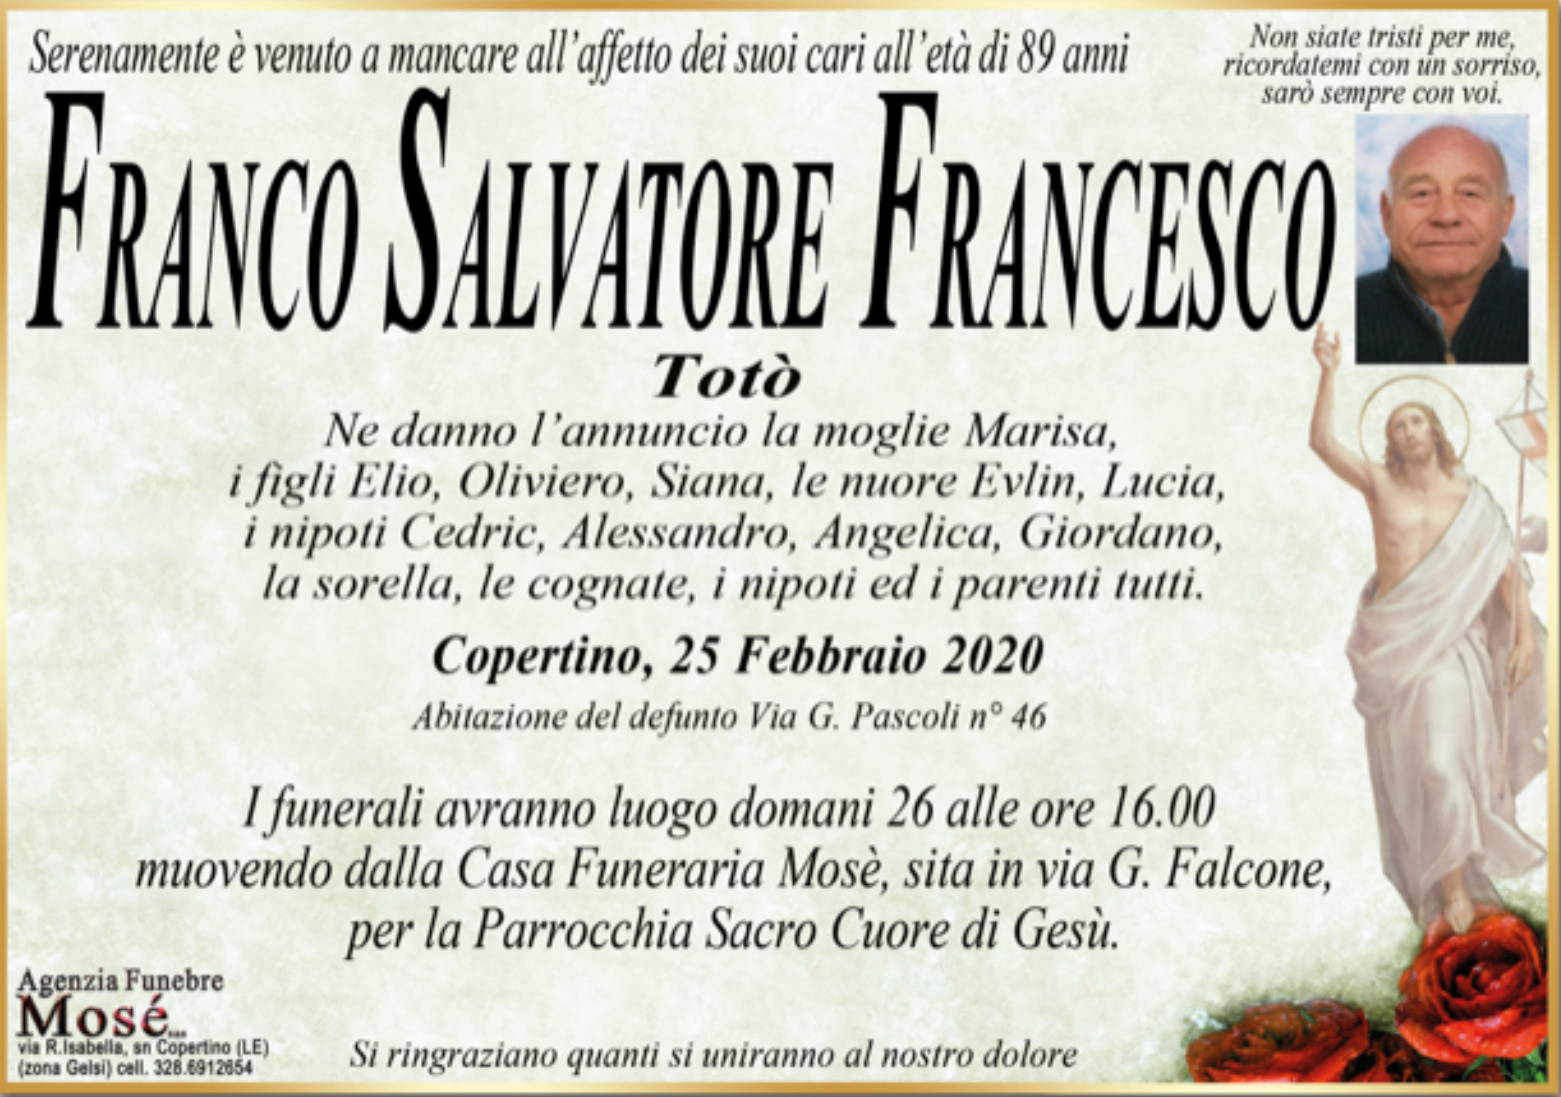 Salvatore Francesco Franco